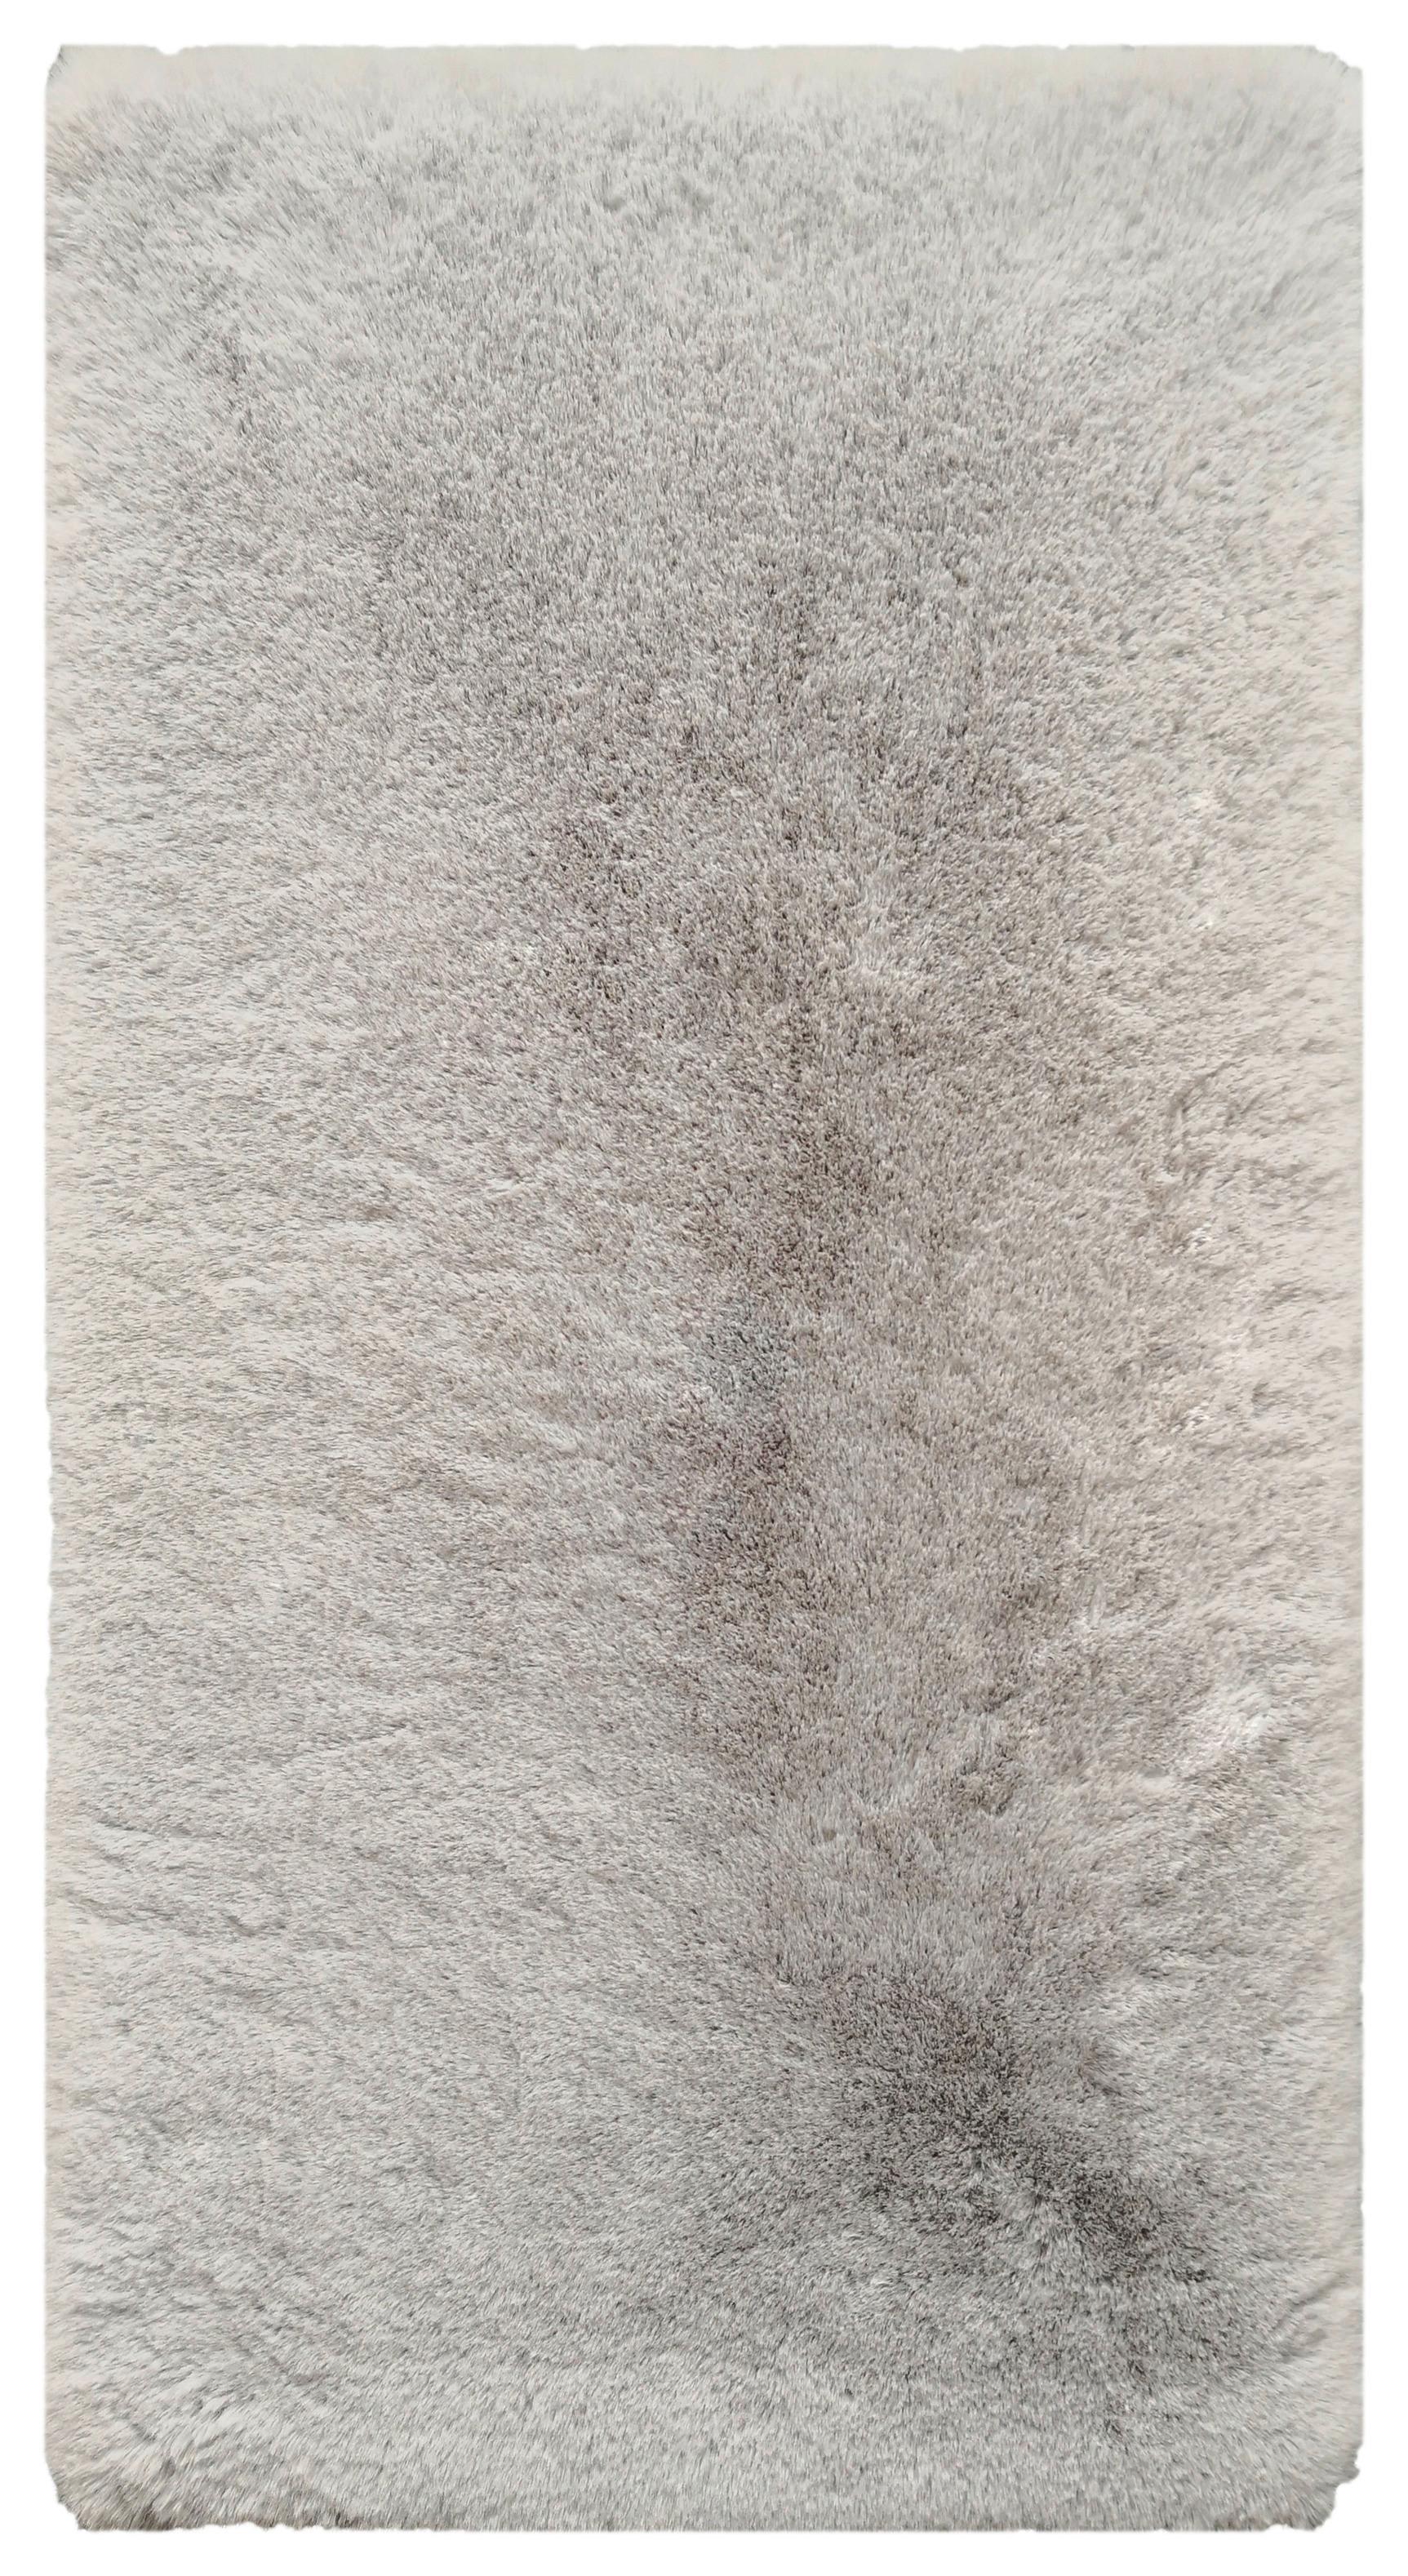 Kunstfell Caroline 1 in Silberfarben ca. 80x150cm - Silberfarben, Textil (80/150cm) - Modern Living